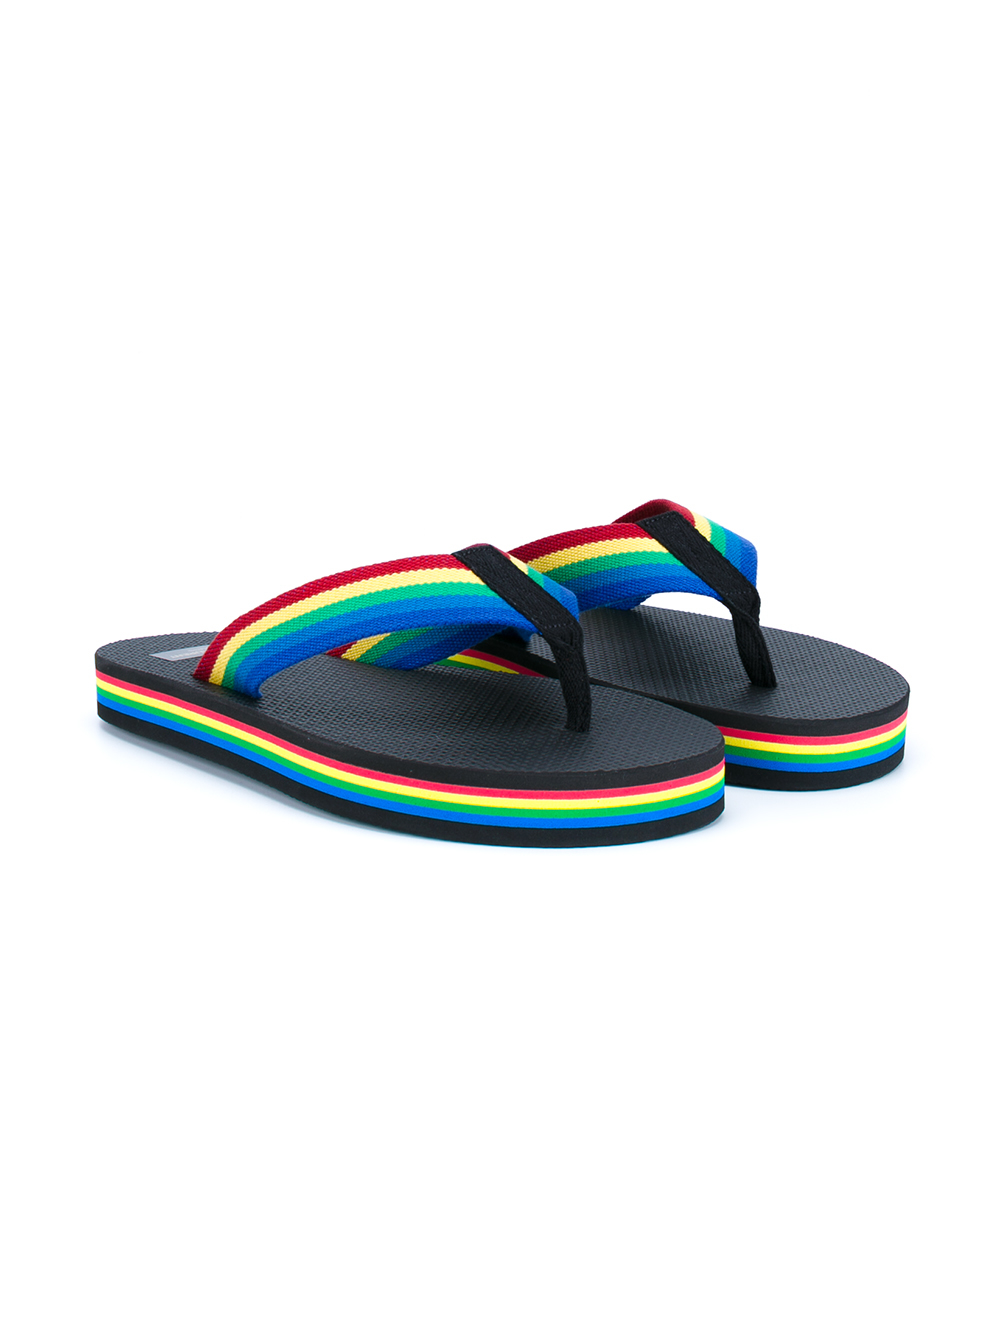 Saint Laurent Rainbow Flip-flops in Black | Lyst